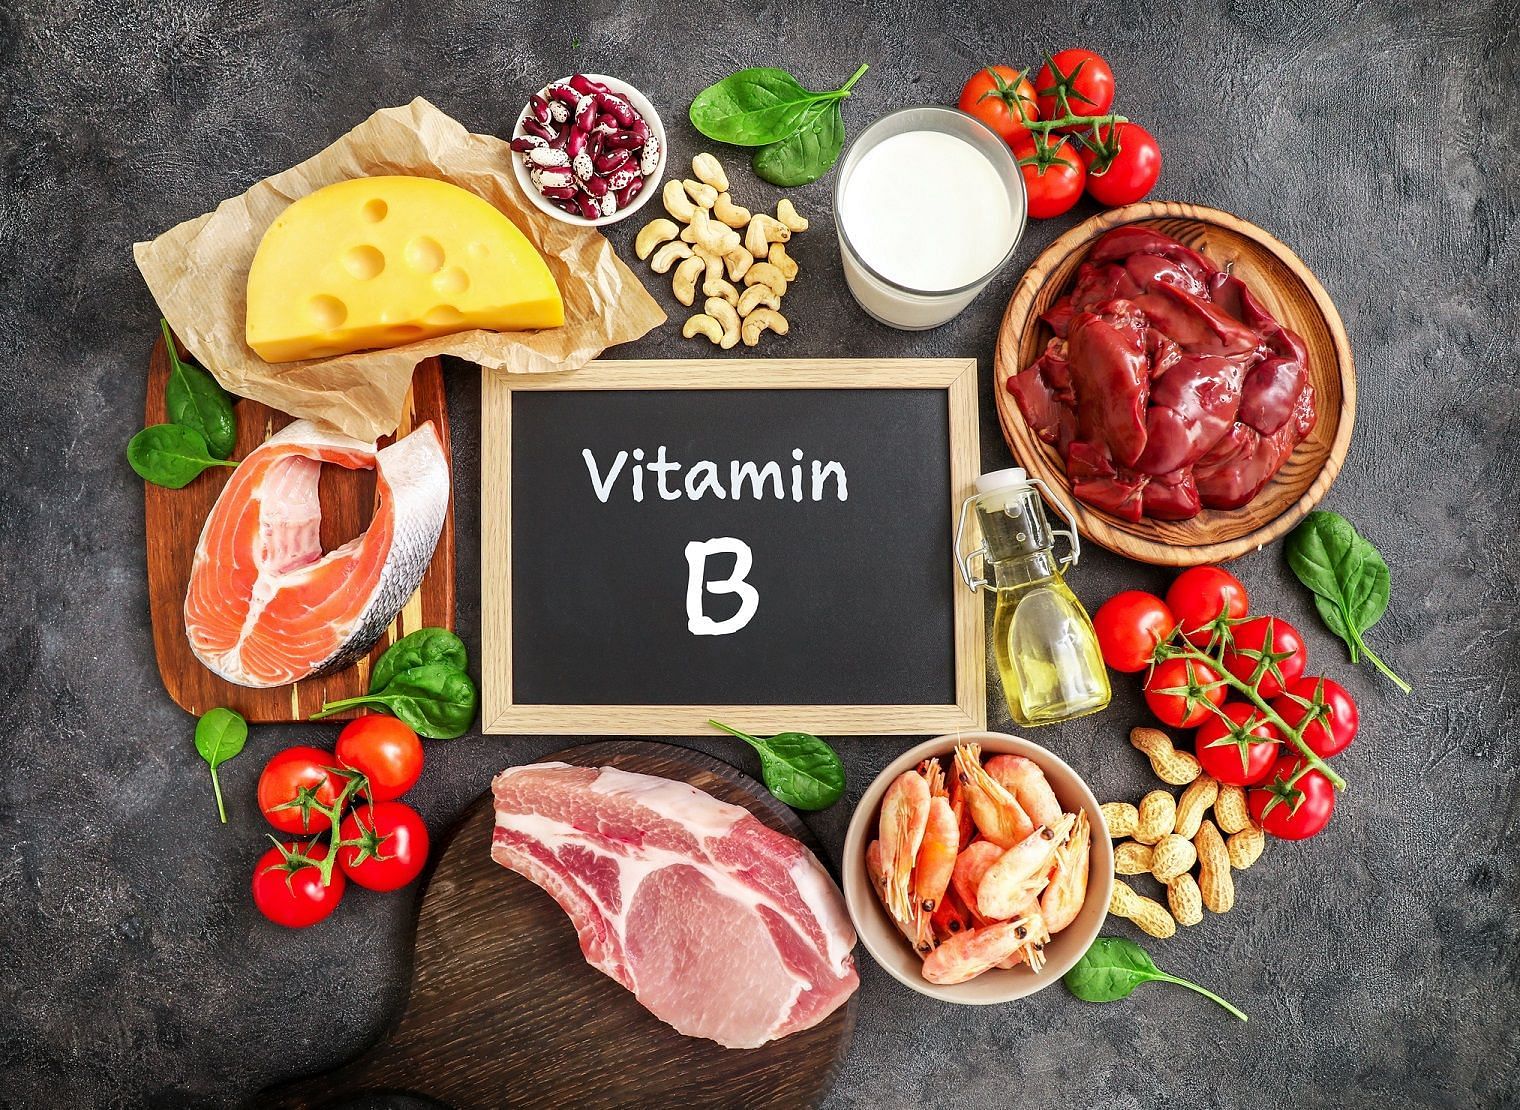 Top 5 health benefits of Vitamin B 